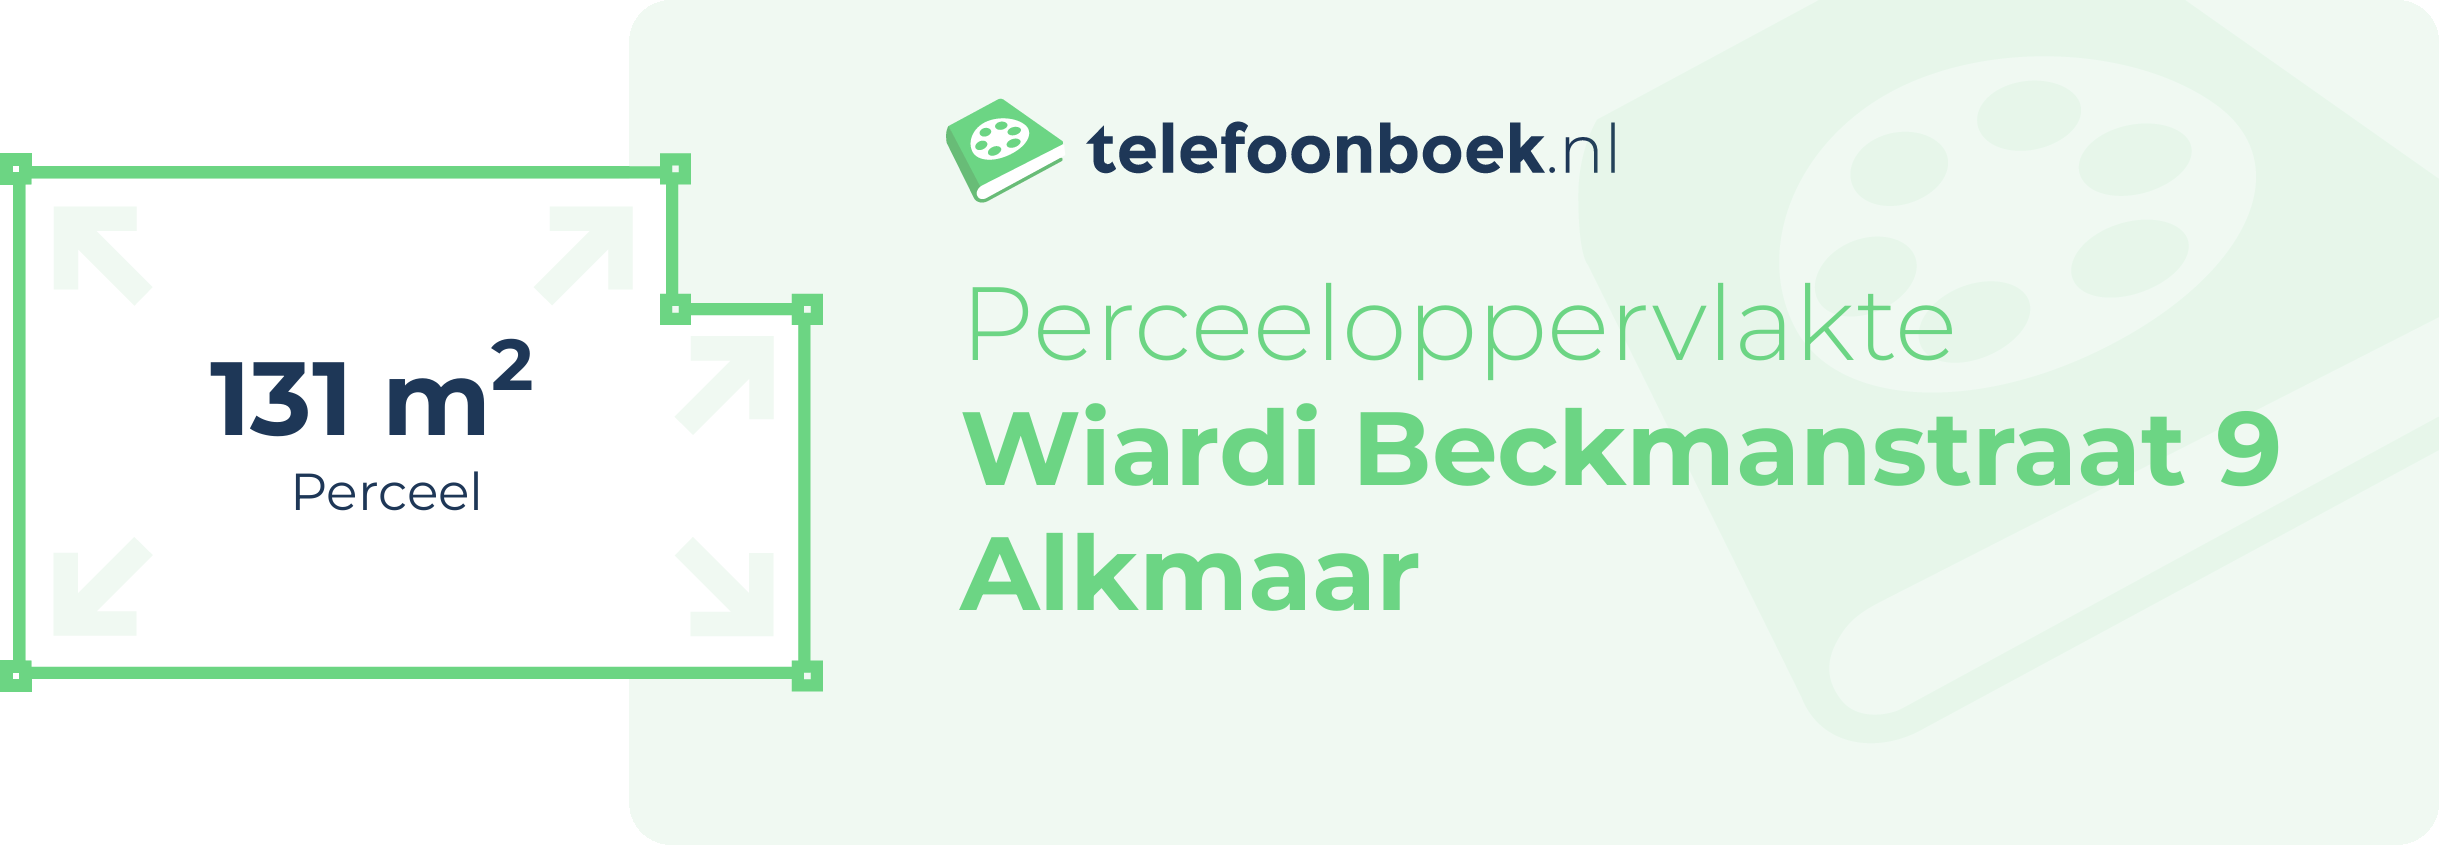 Perceeloppervlakte Wiardi Beckmanstraat 9 Alkmaar